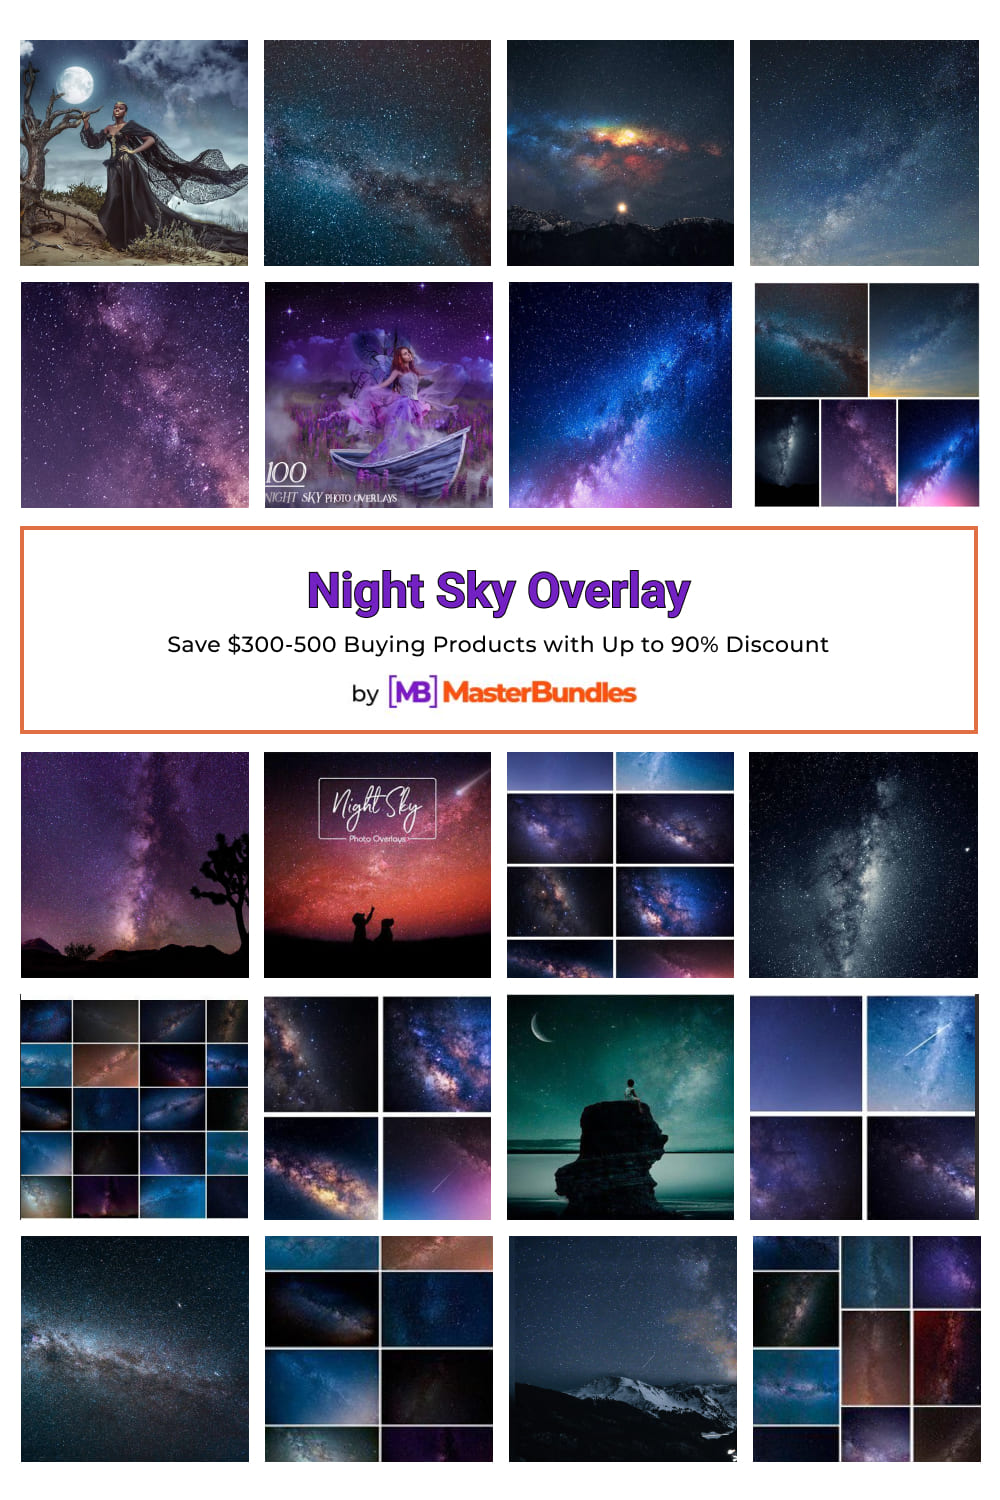 Night Sky Overlay Pinterest image.